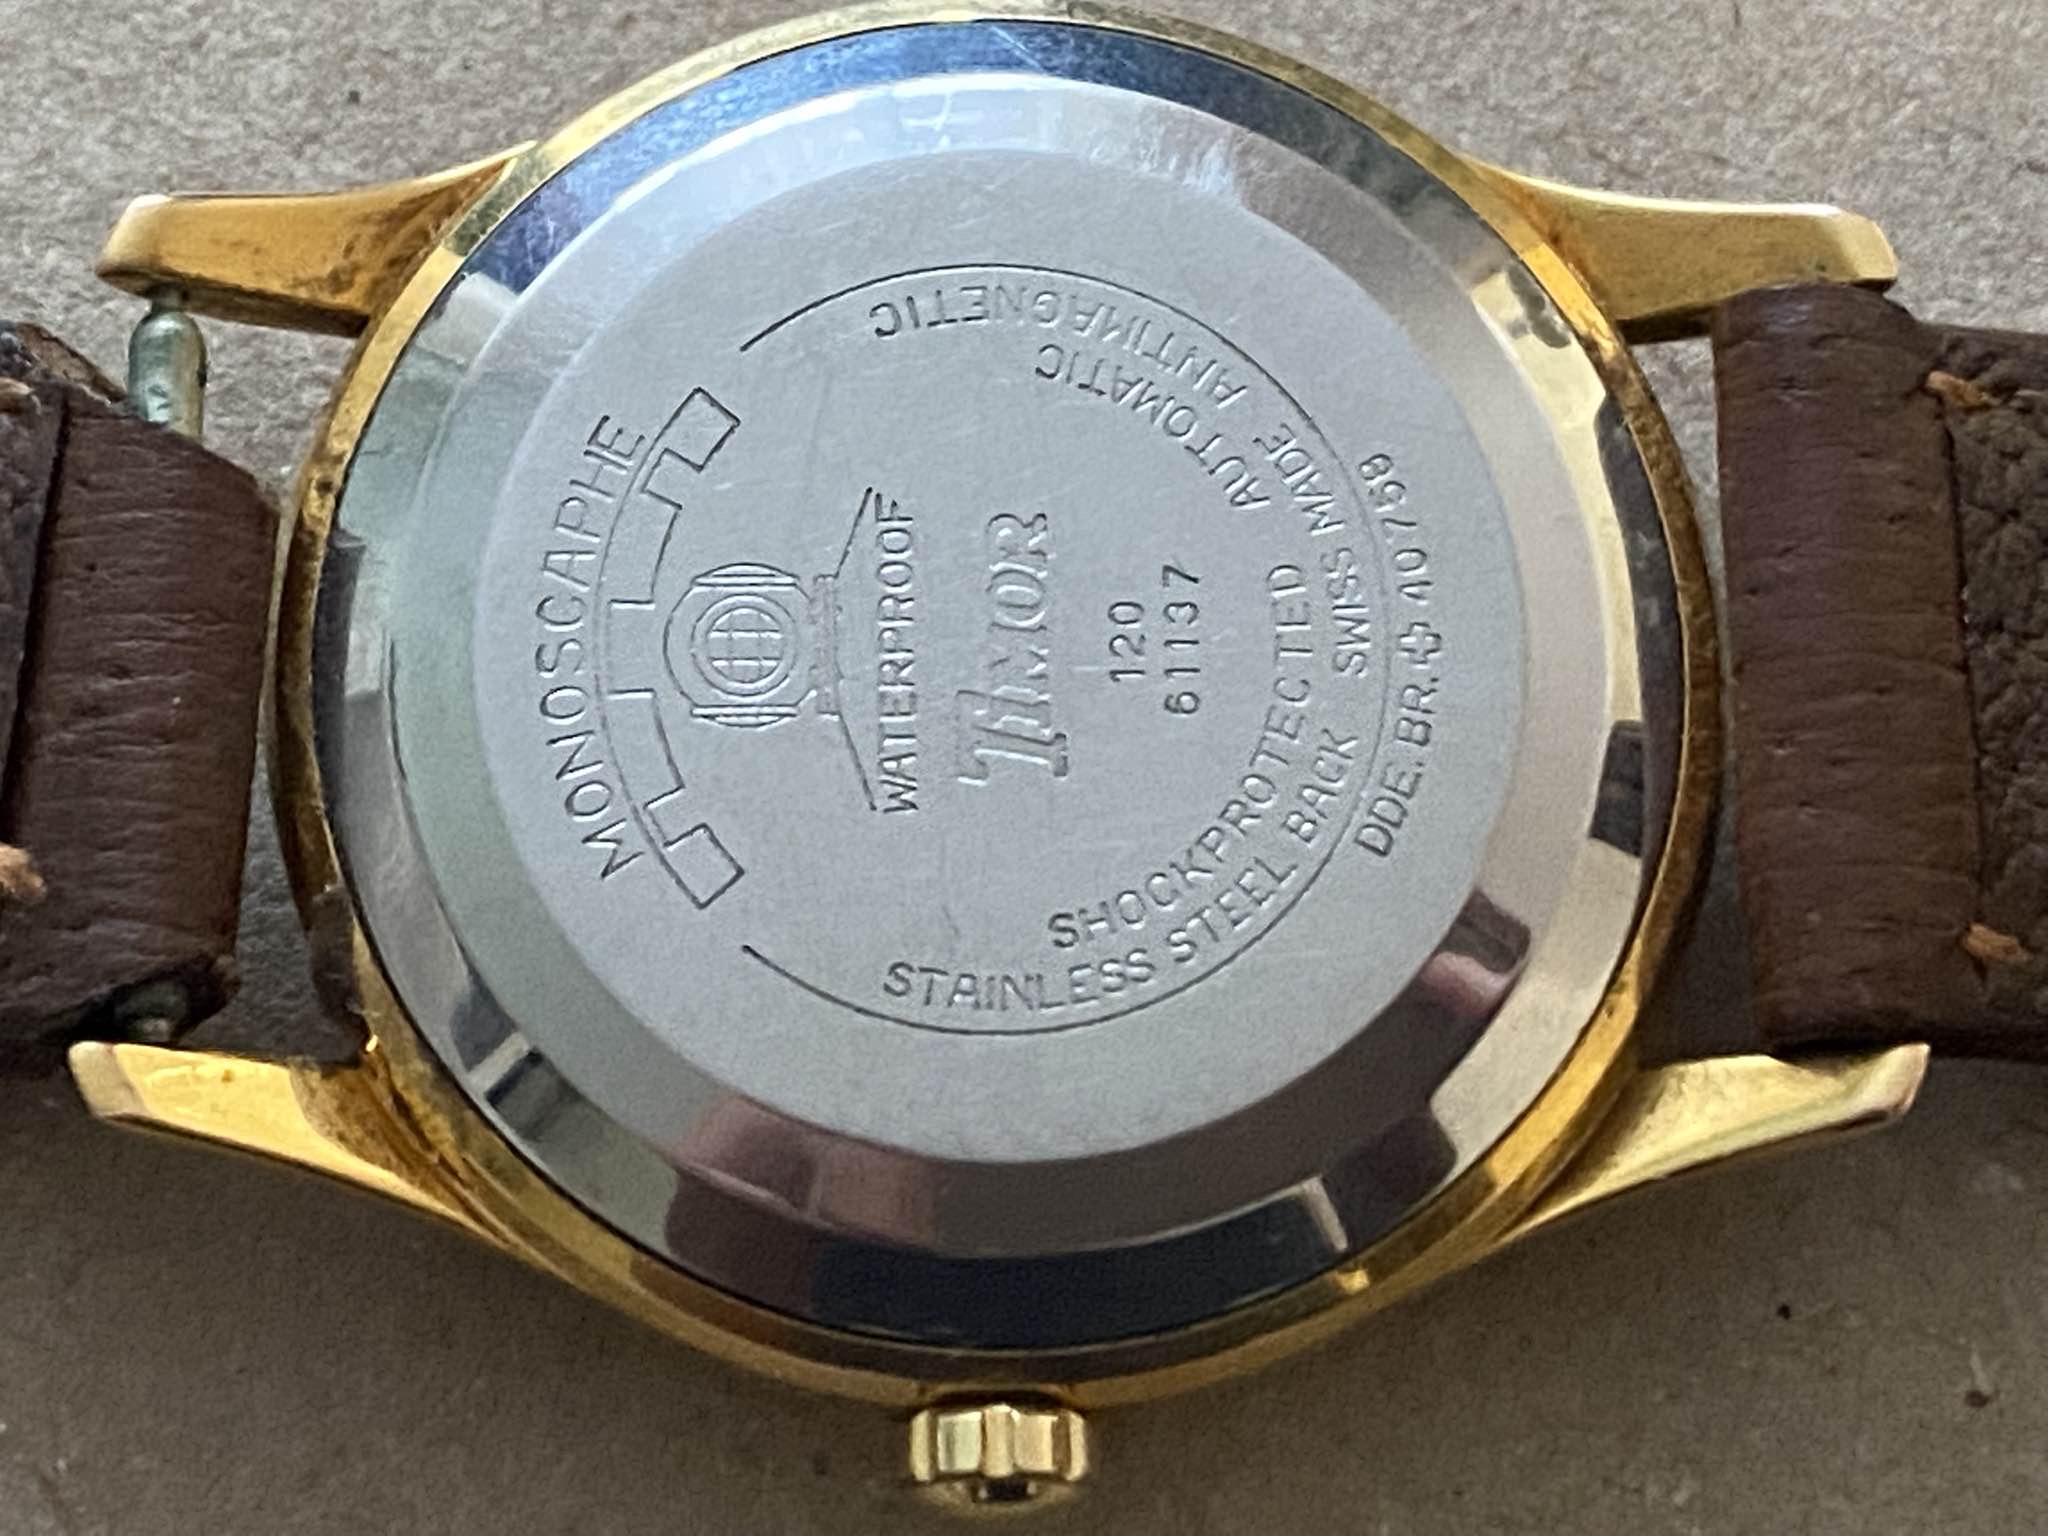 Vintage Timor Automatic Men’s Swiss Watch Special Edition King Hussein of Jordan ساعة تيمور اتوماتيك هدية من الملك حسين بن طلال